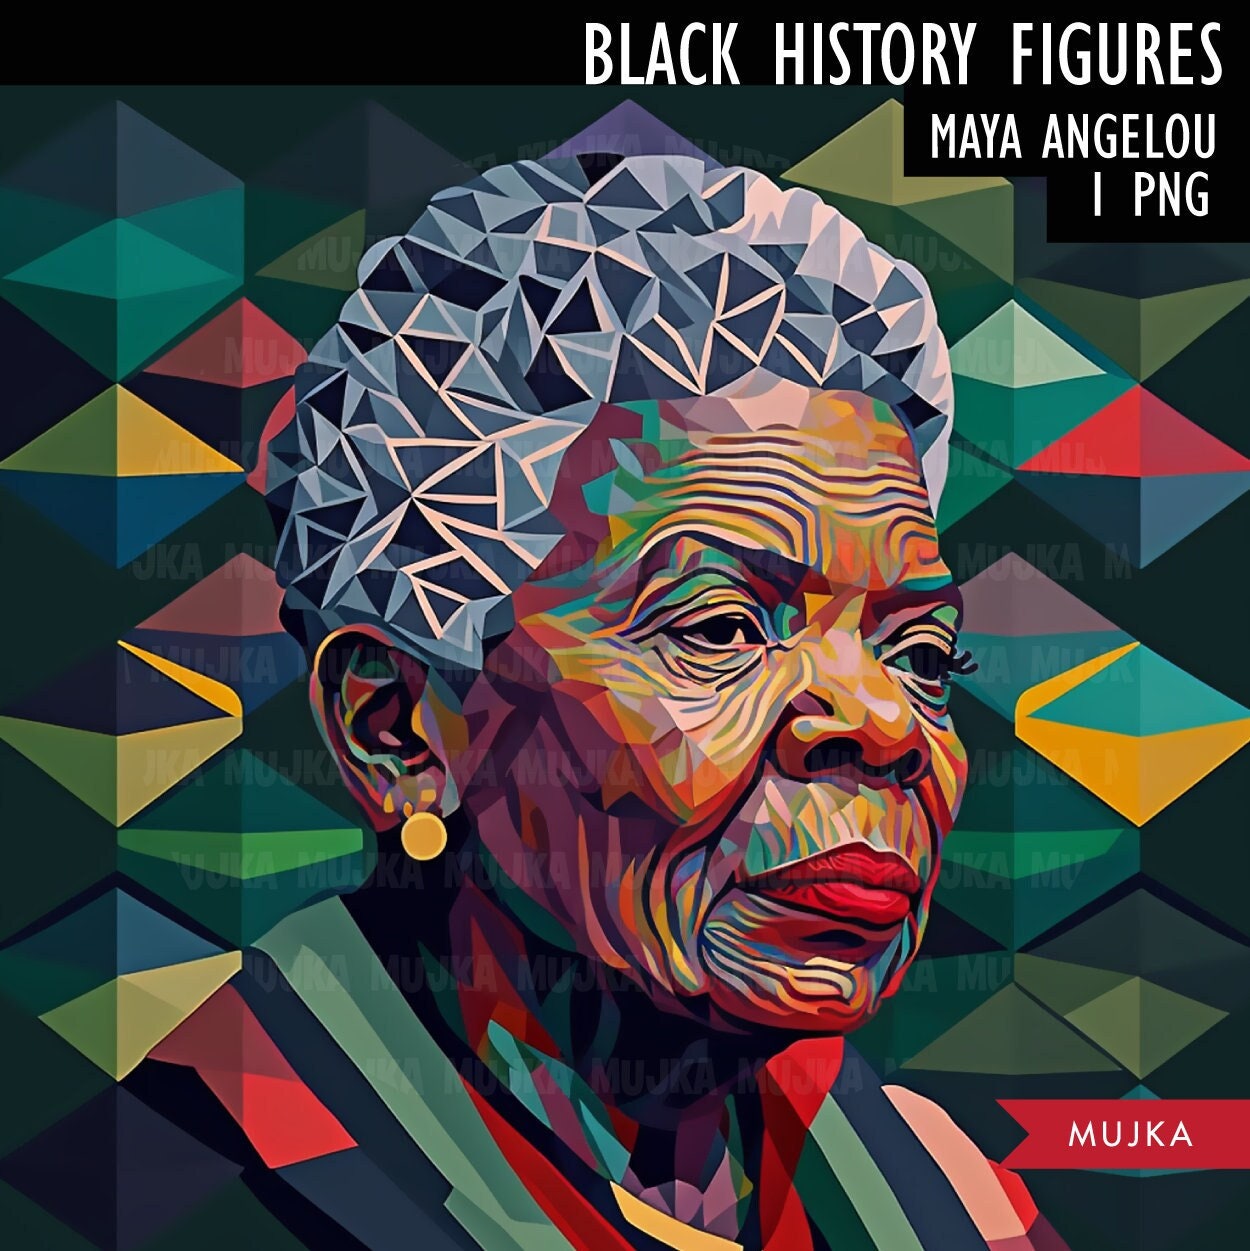 Black History PNG, Maya Angelou poster, Black History Cards, printable Black History Art, Black History wall art, sublimation design